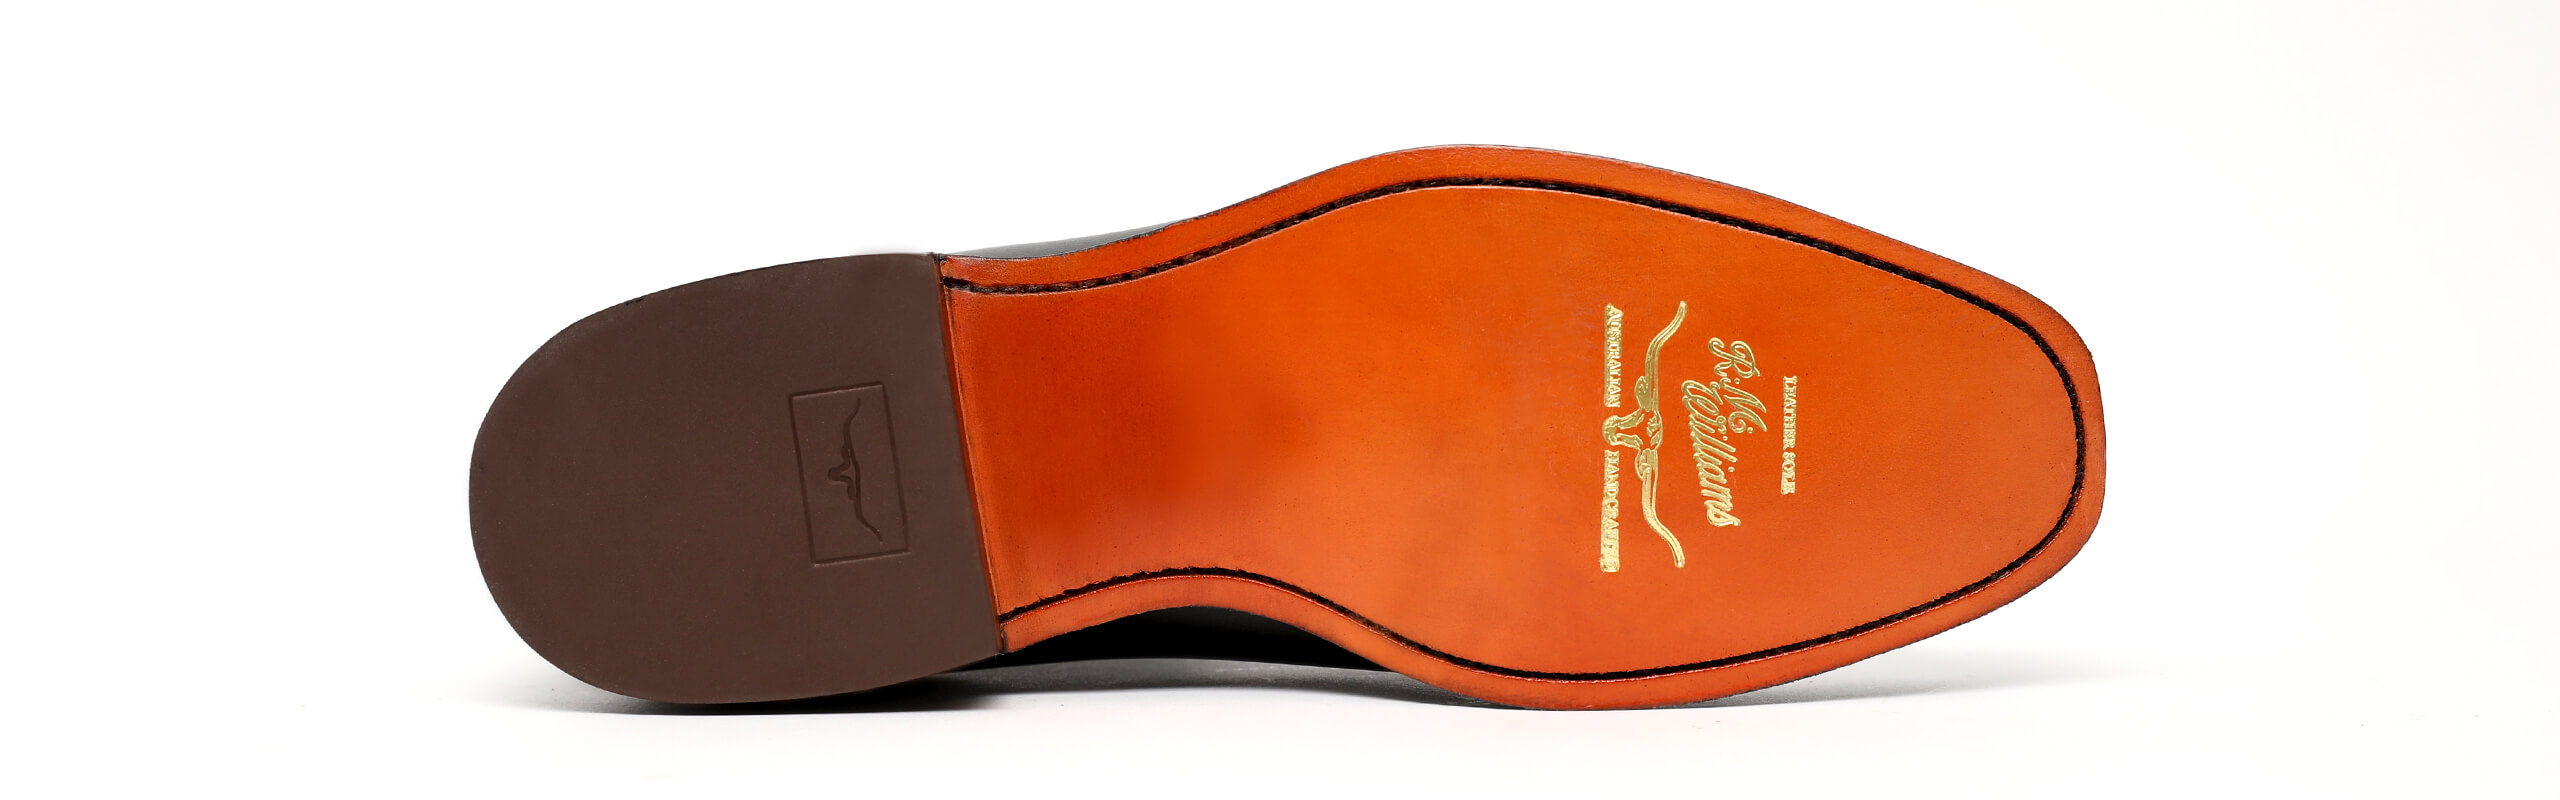 R.M.Williams leather sole